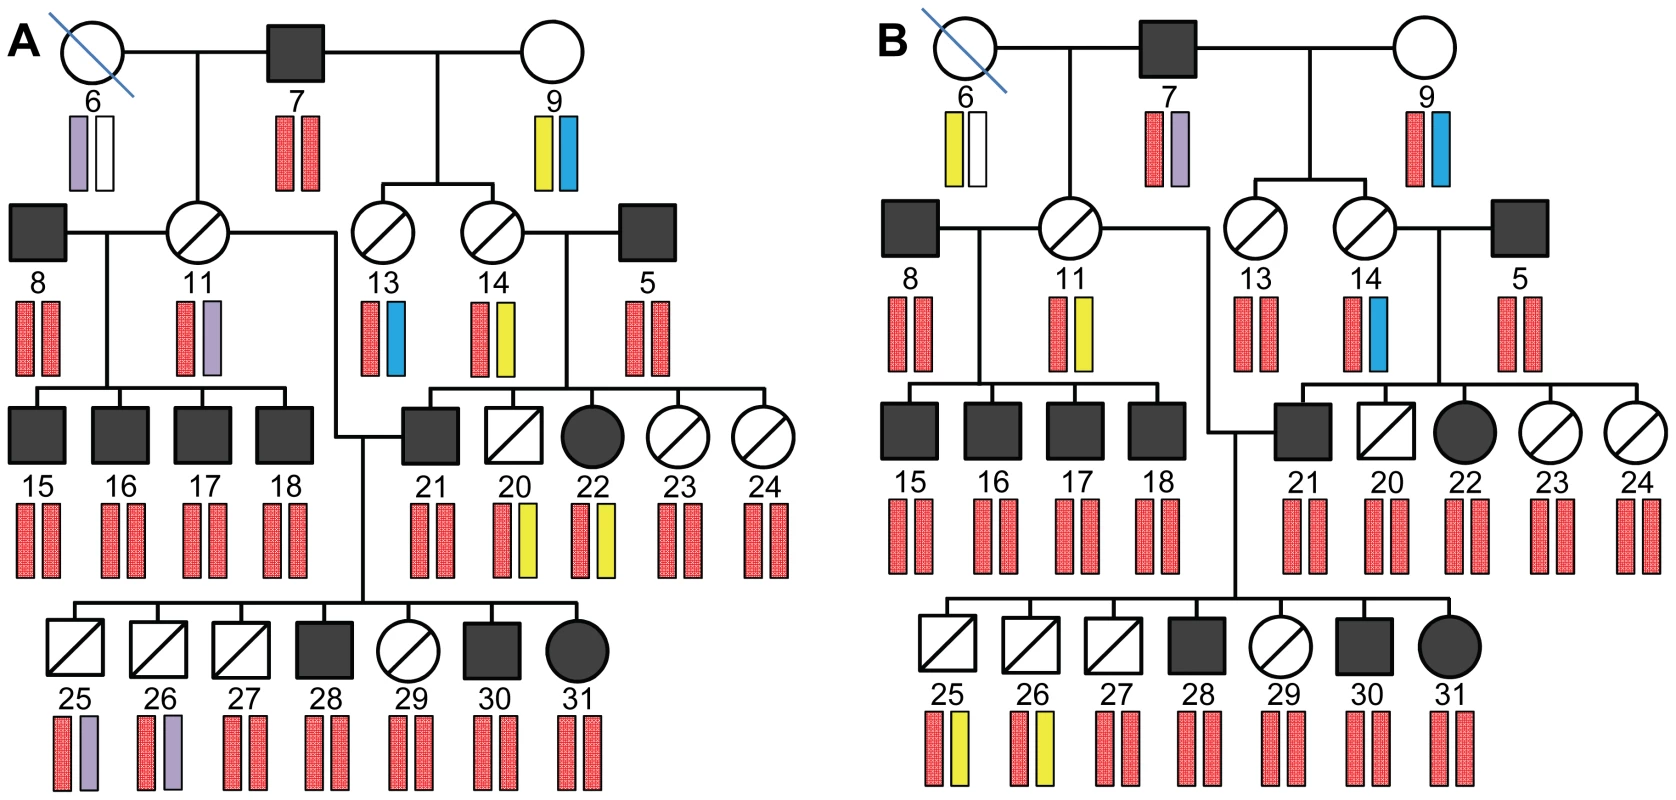 Haplotype analysis of chromosome 15 regions R1 and R2.